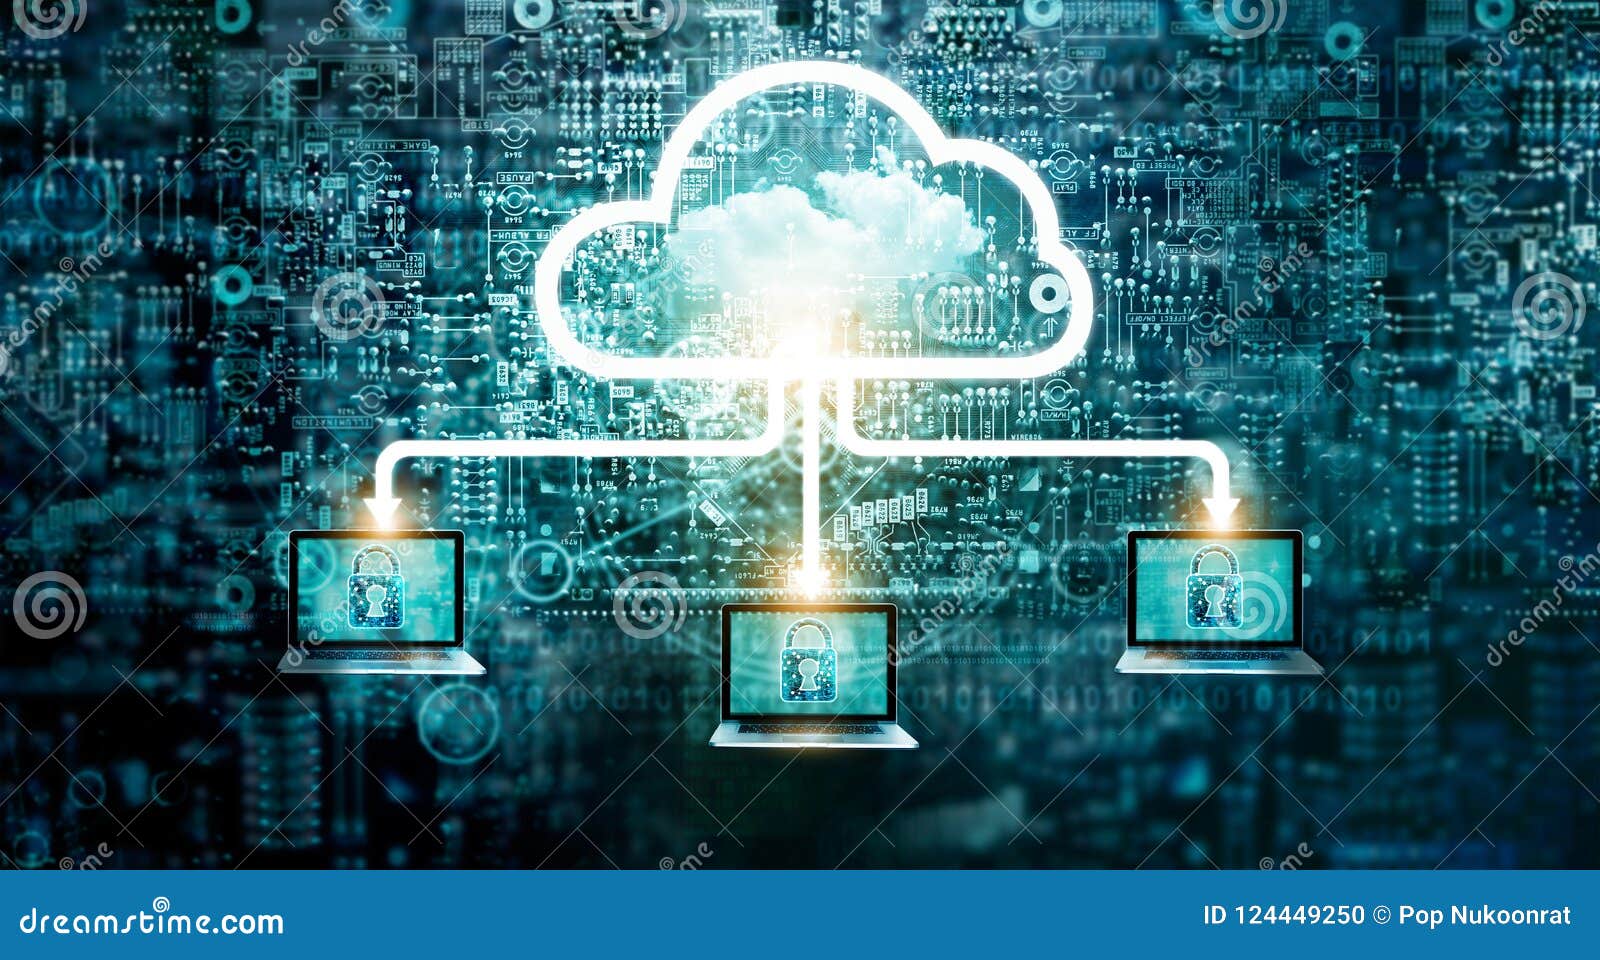 cloud computing diagram network data storage technology service